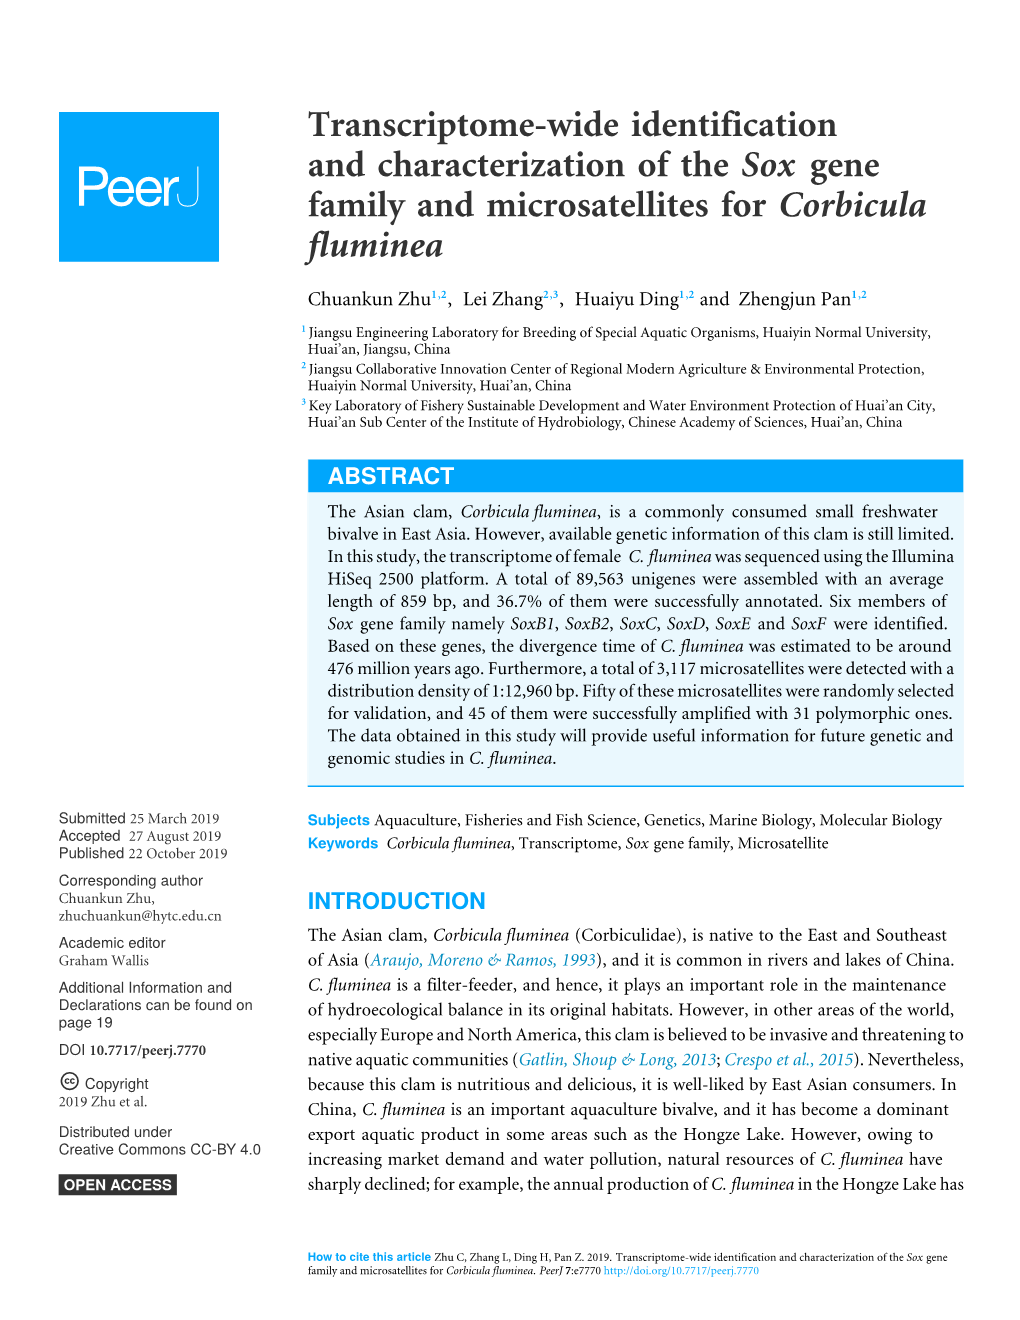 Transcriptome-Wide Identification and Characterization of the Sox Gene Family and Microsatellites for Corbicula Fluminea